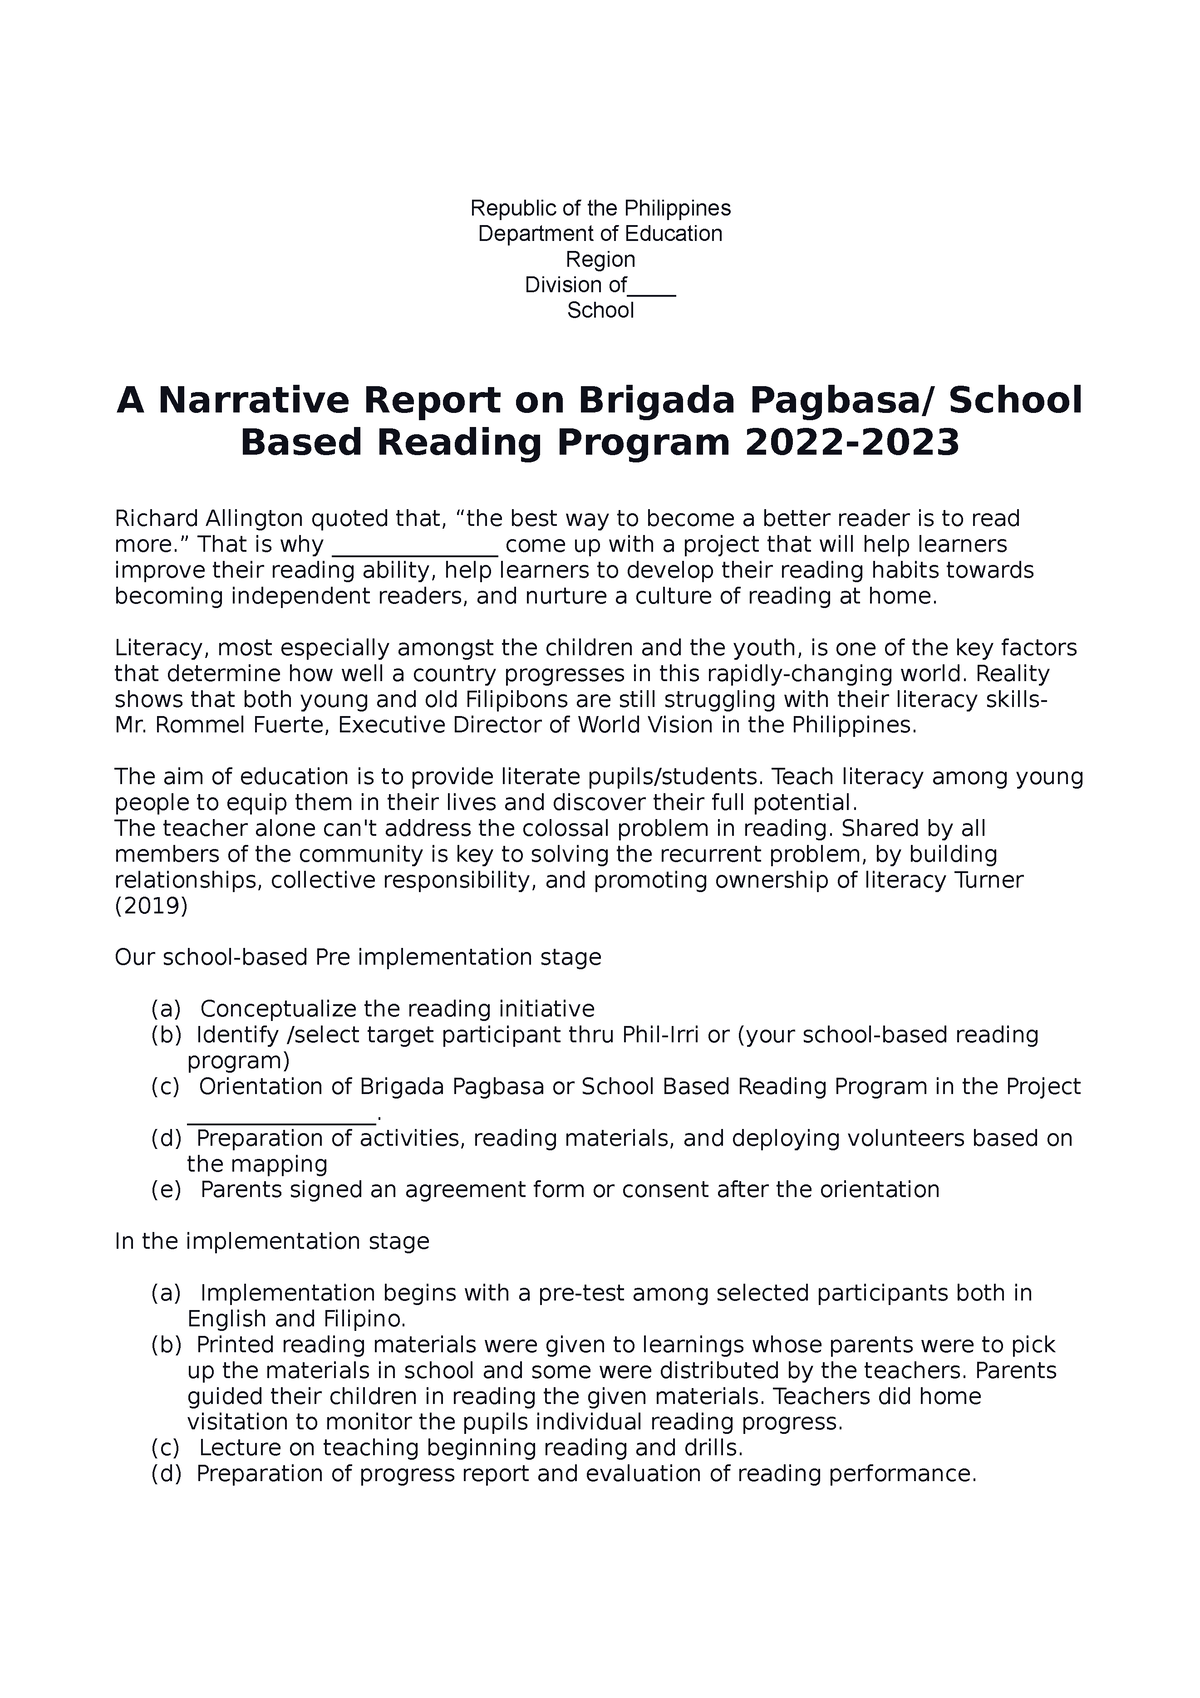 Accomplishment Report Launching Of Brigada Pagbasa 2022 Department Vrogue